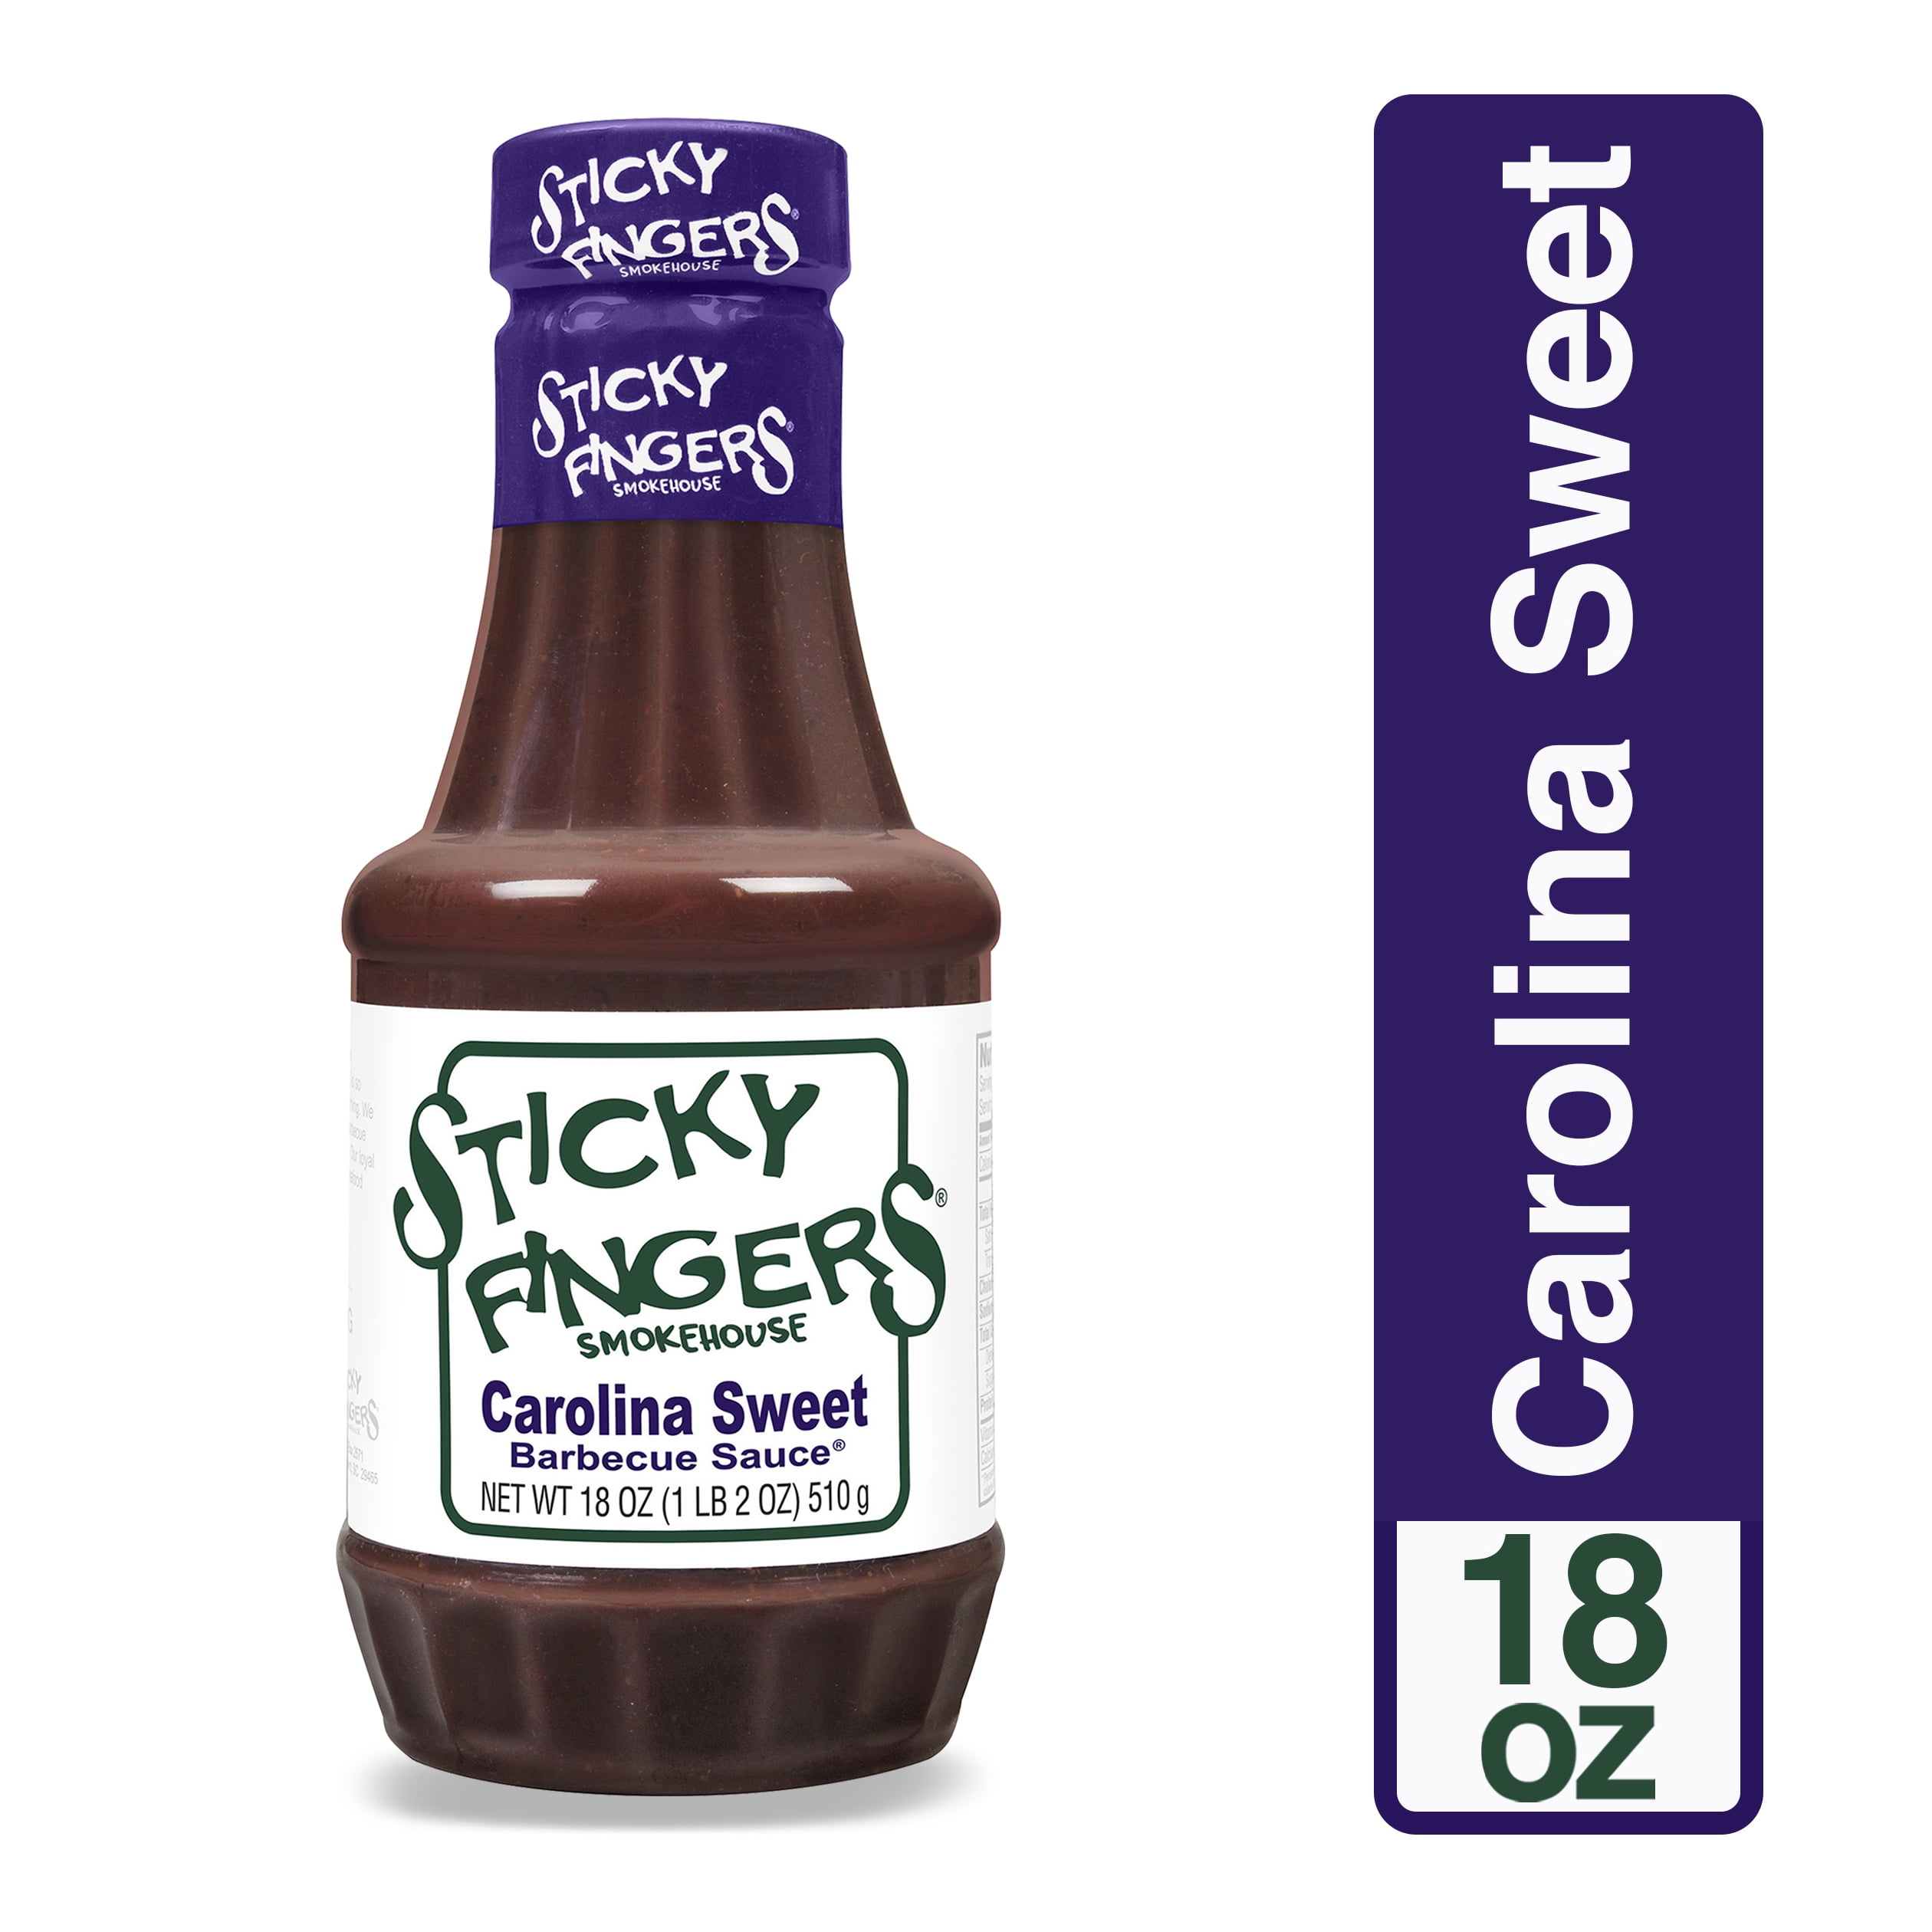 Sticky Fingers Smokehouse Carolina Sweet Barbecue Sauce 18 oz